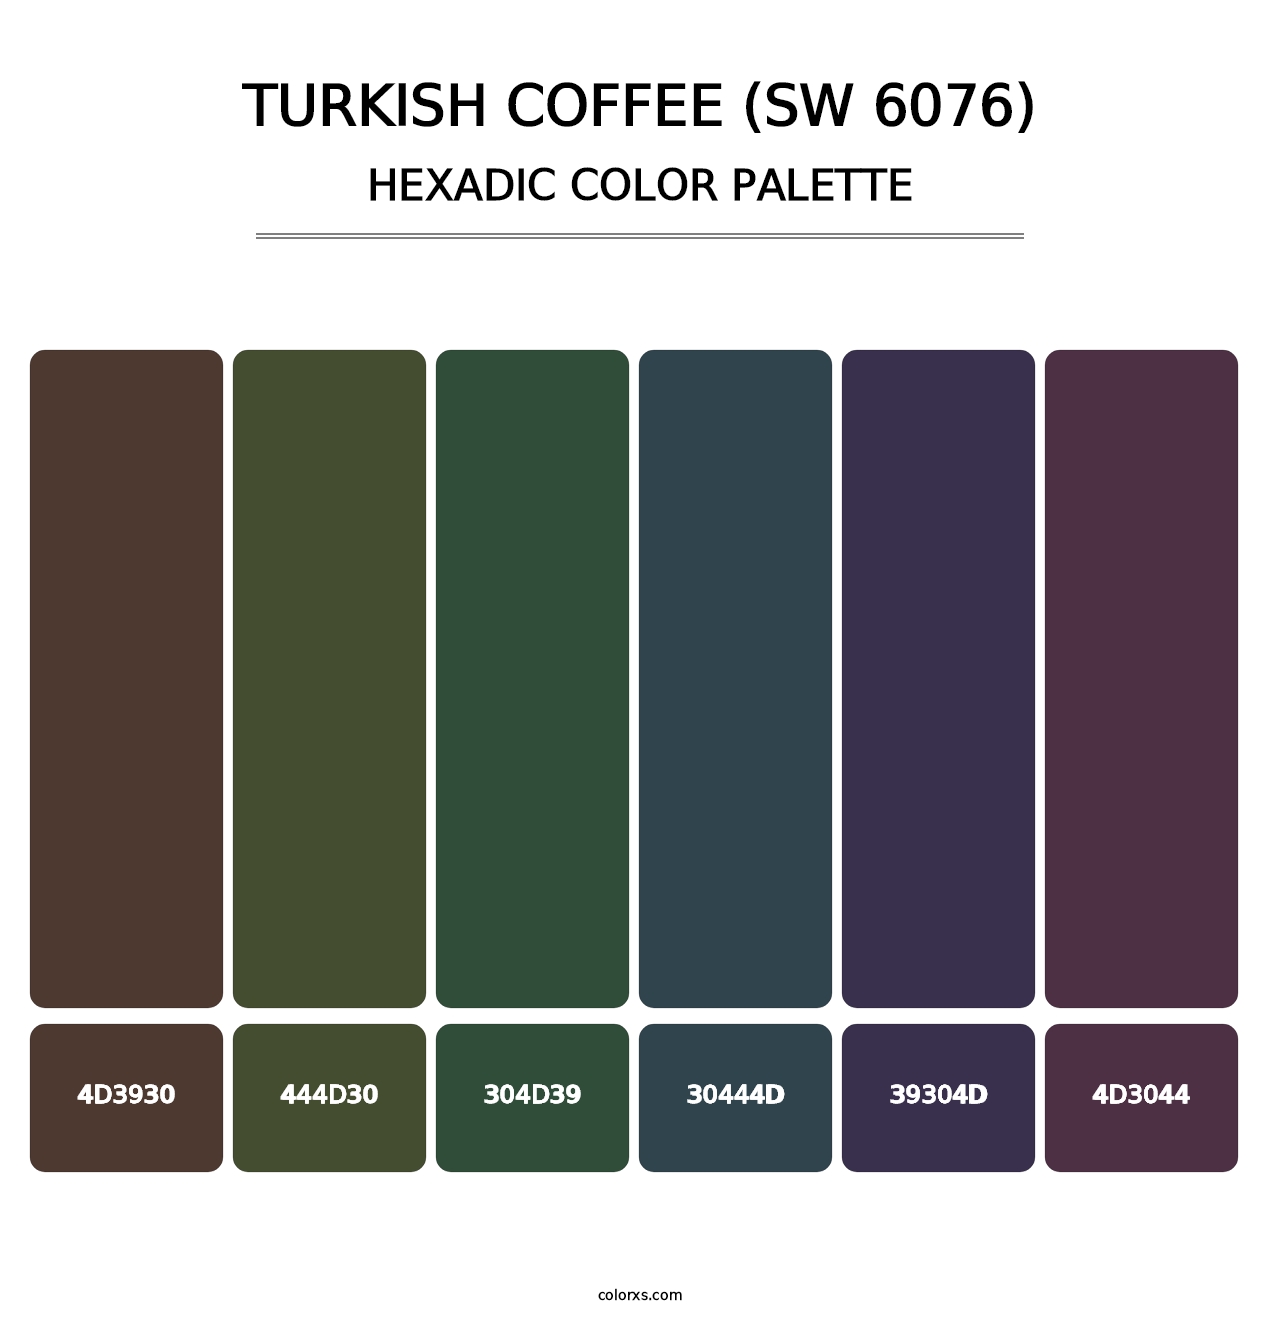 Turkish Coffee (SW 6076) - Hexadic Color Palette